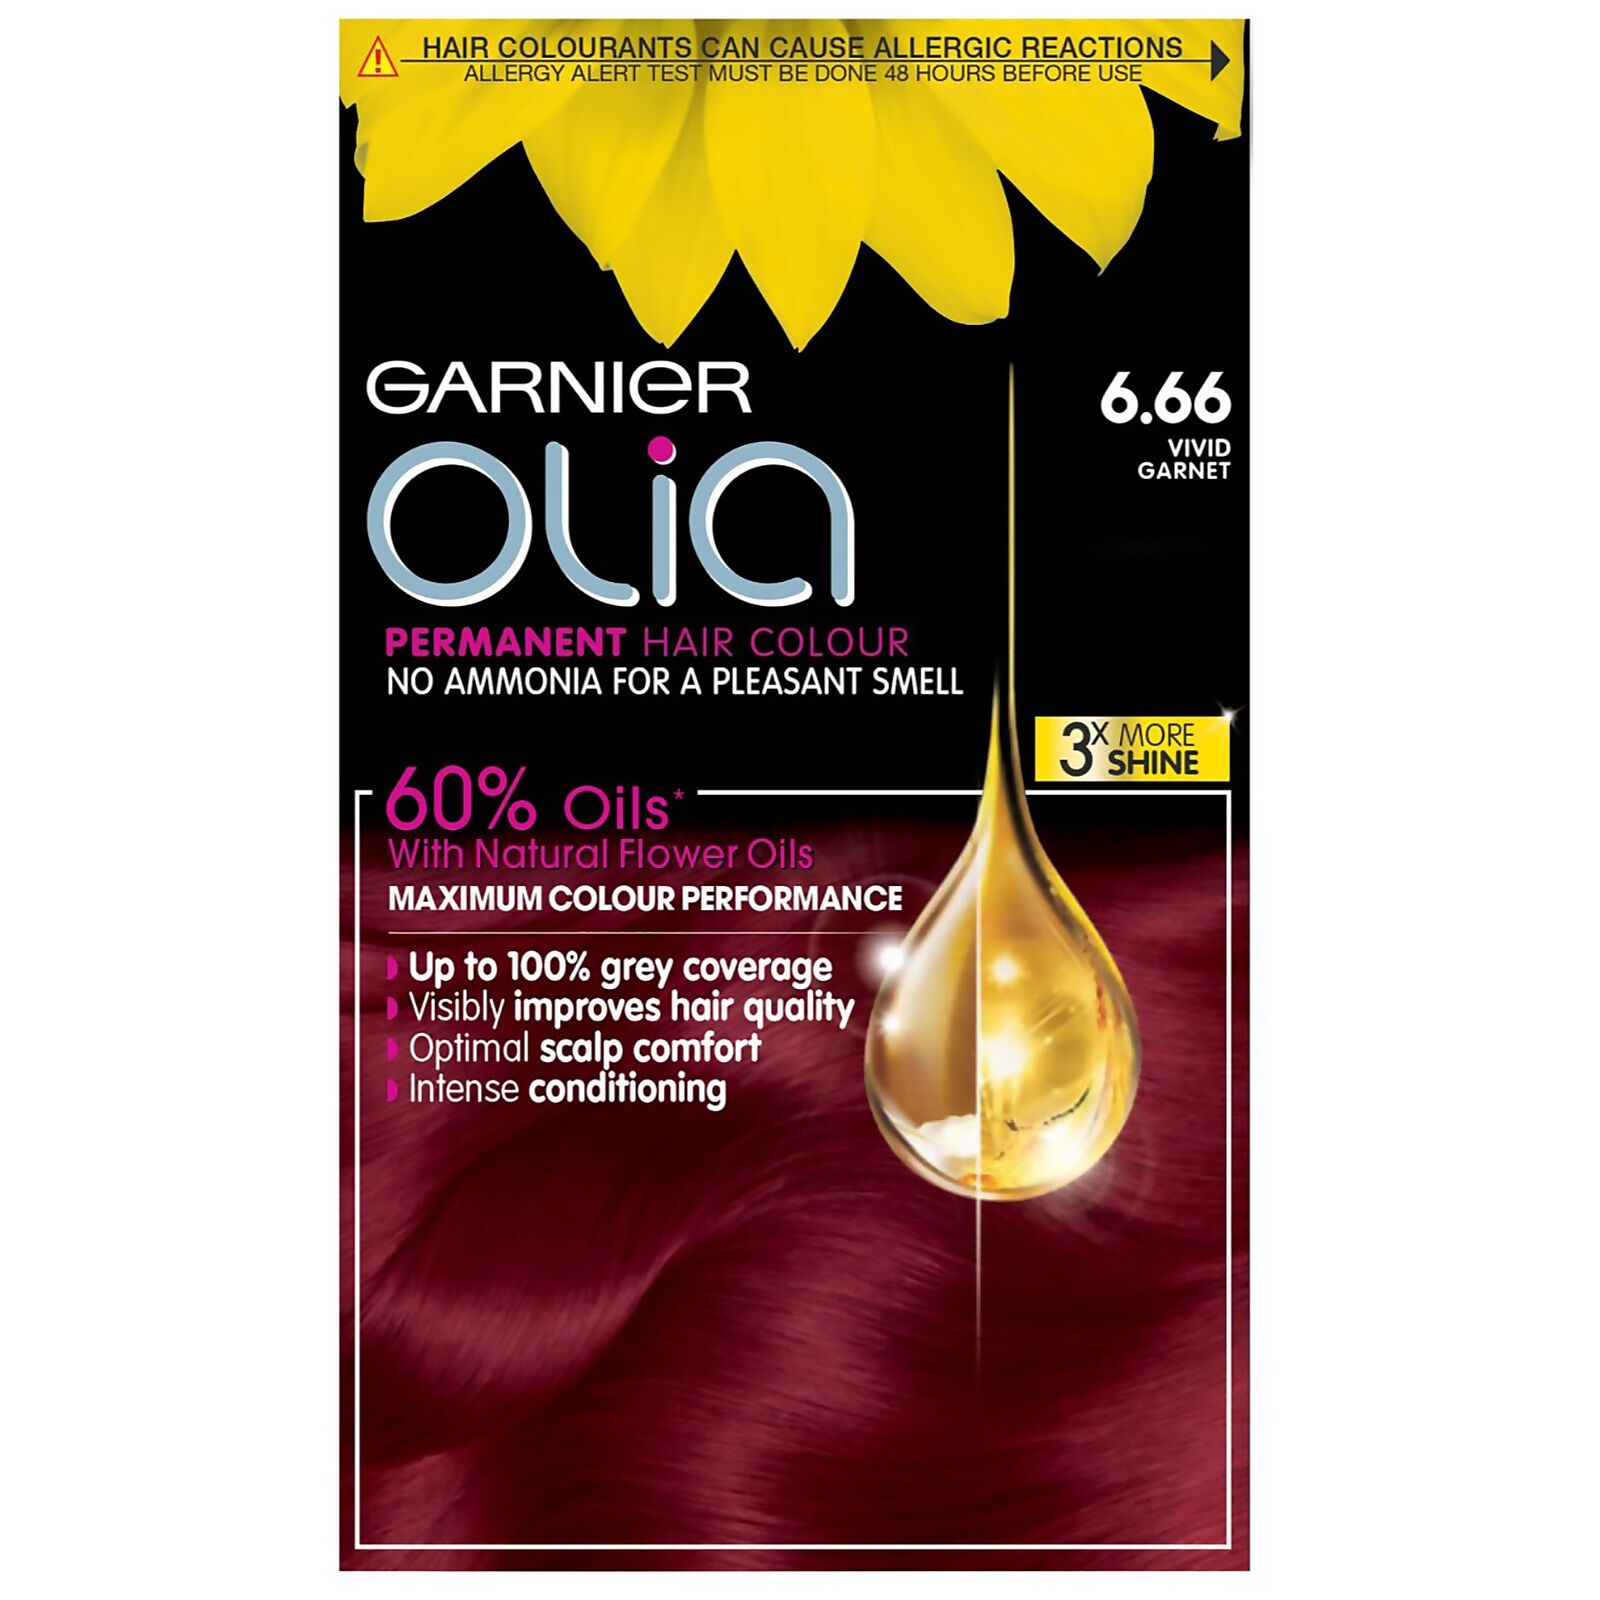 Garnier Olia Permanent Hair Dye (Various Shades) - 6.66 Vivid Garnet Red